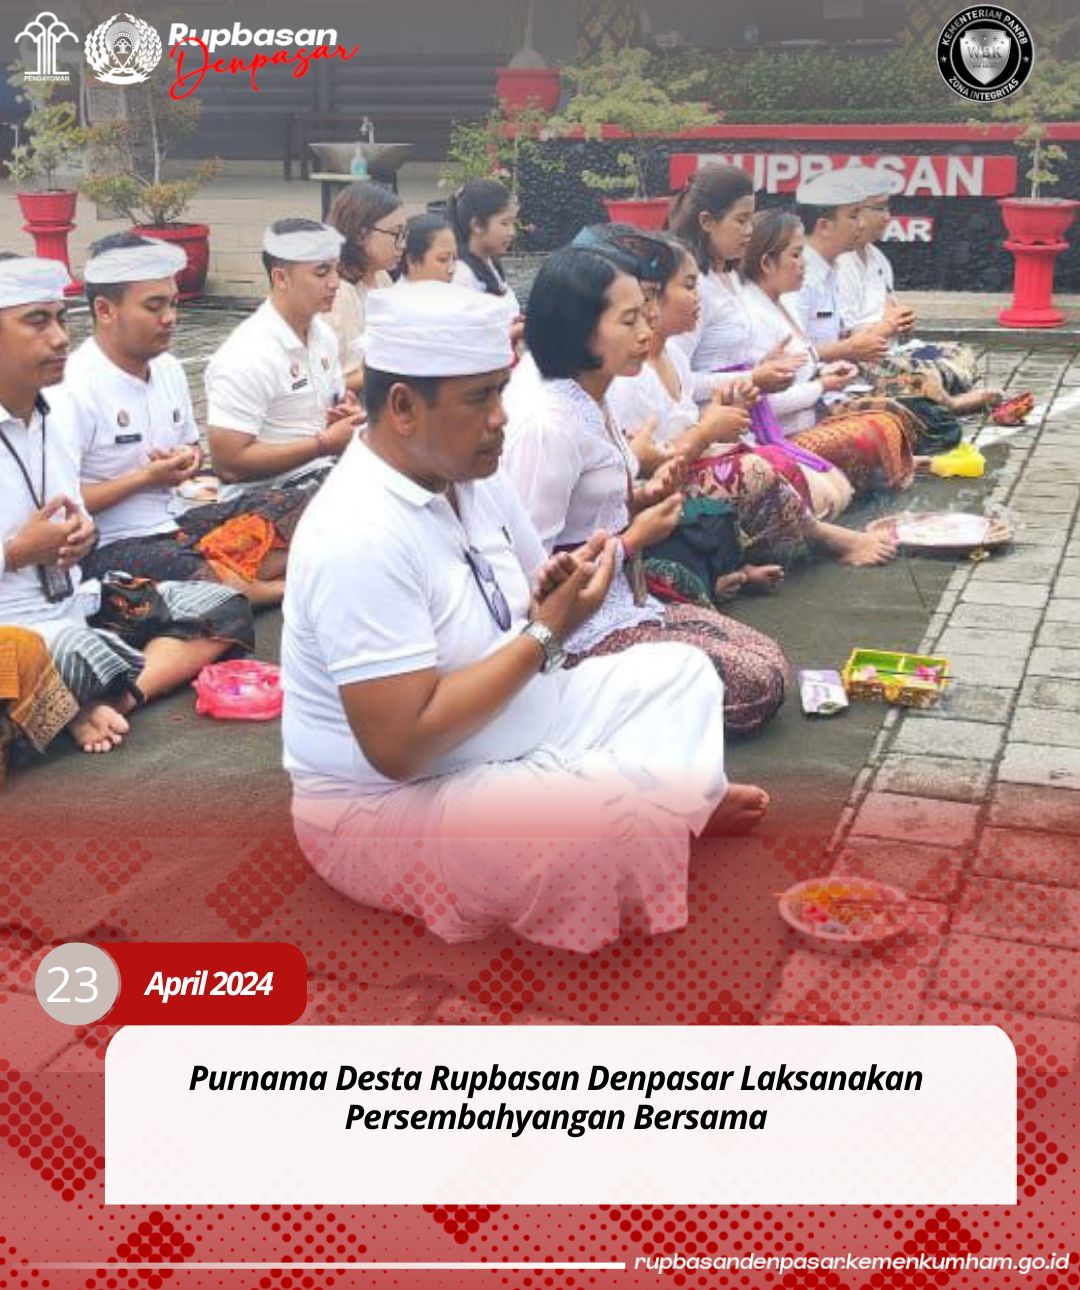 DENPASAR - Selasa, 23 April 2024, Purnama Desta Rupbasan Denpasar Laksanakan Persembahyangan Bersama.